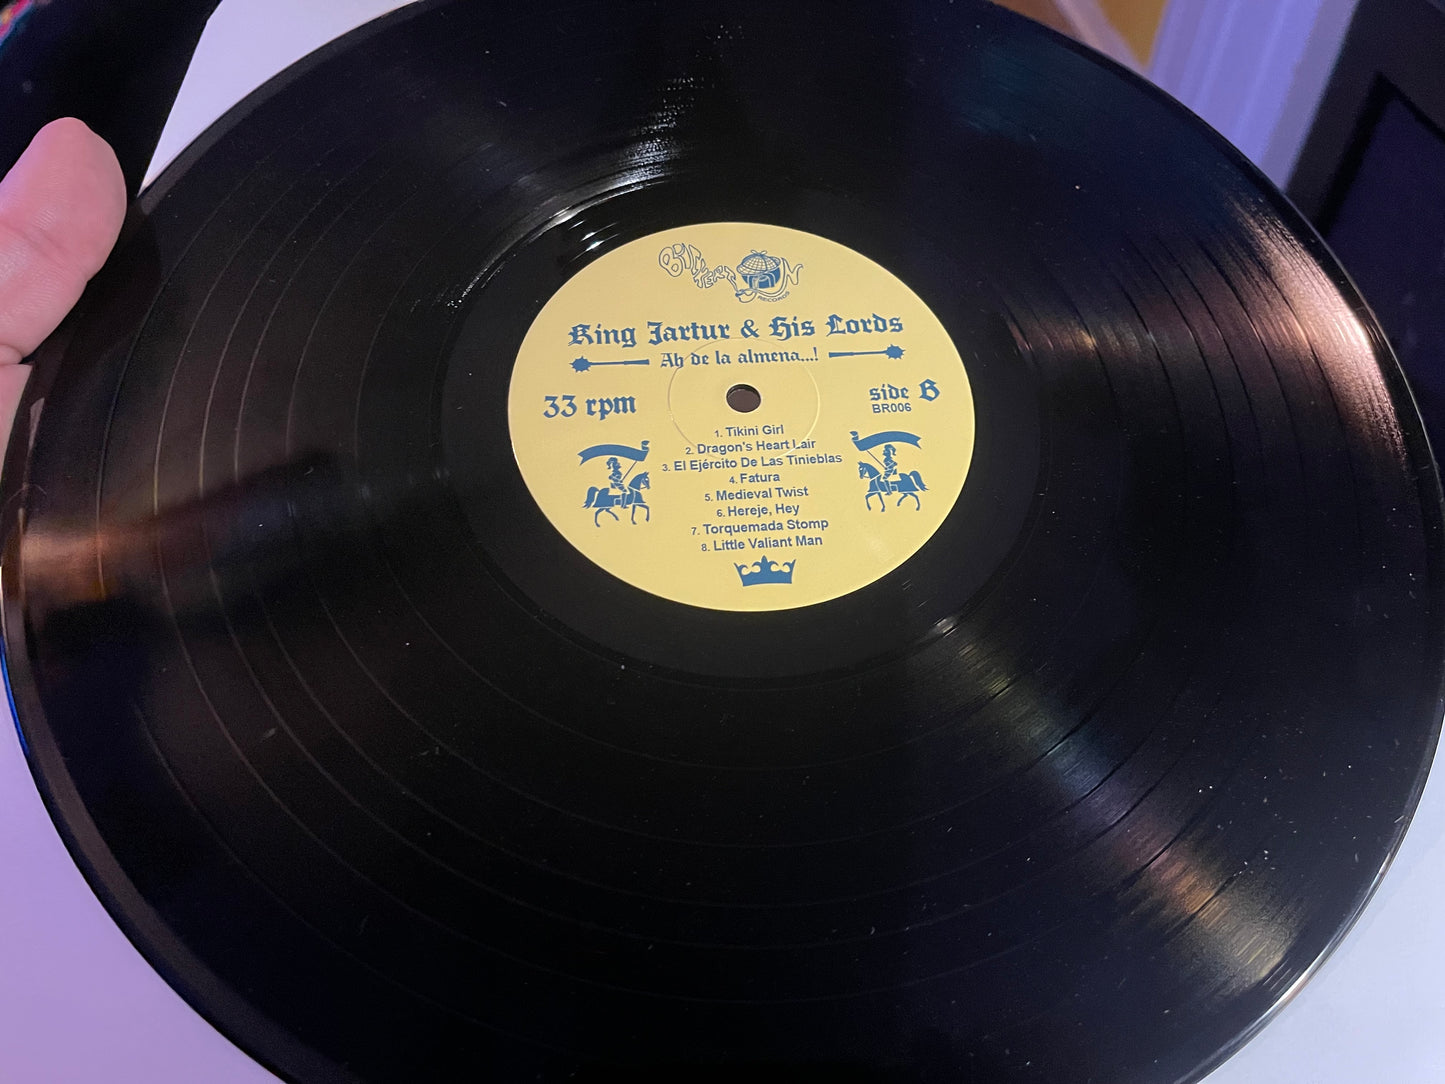 OMRDST-021 King Jartur & His Lords “Ah, de la almena!!” 12 inch LP